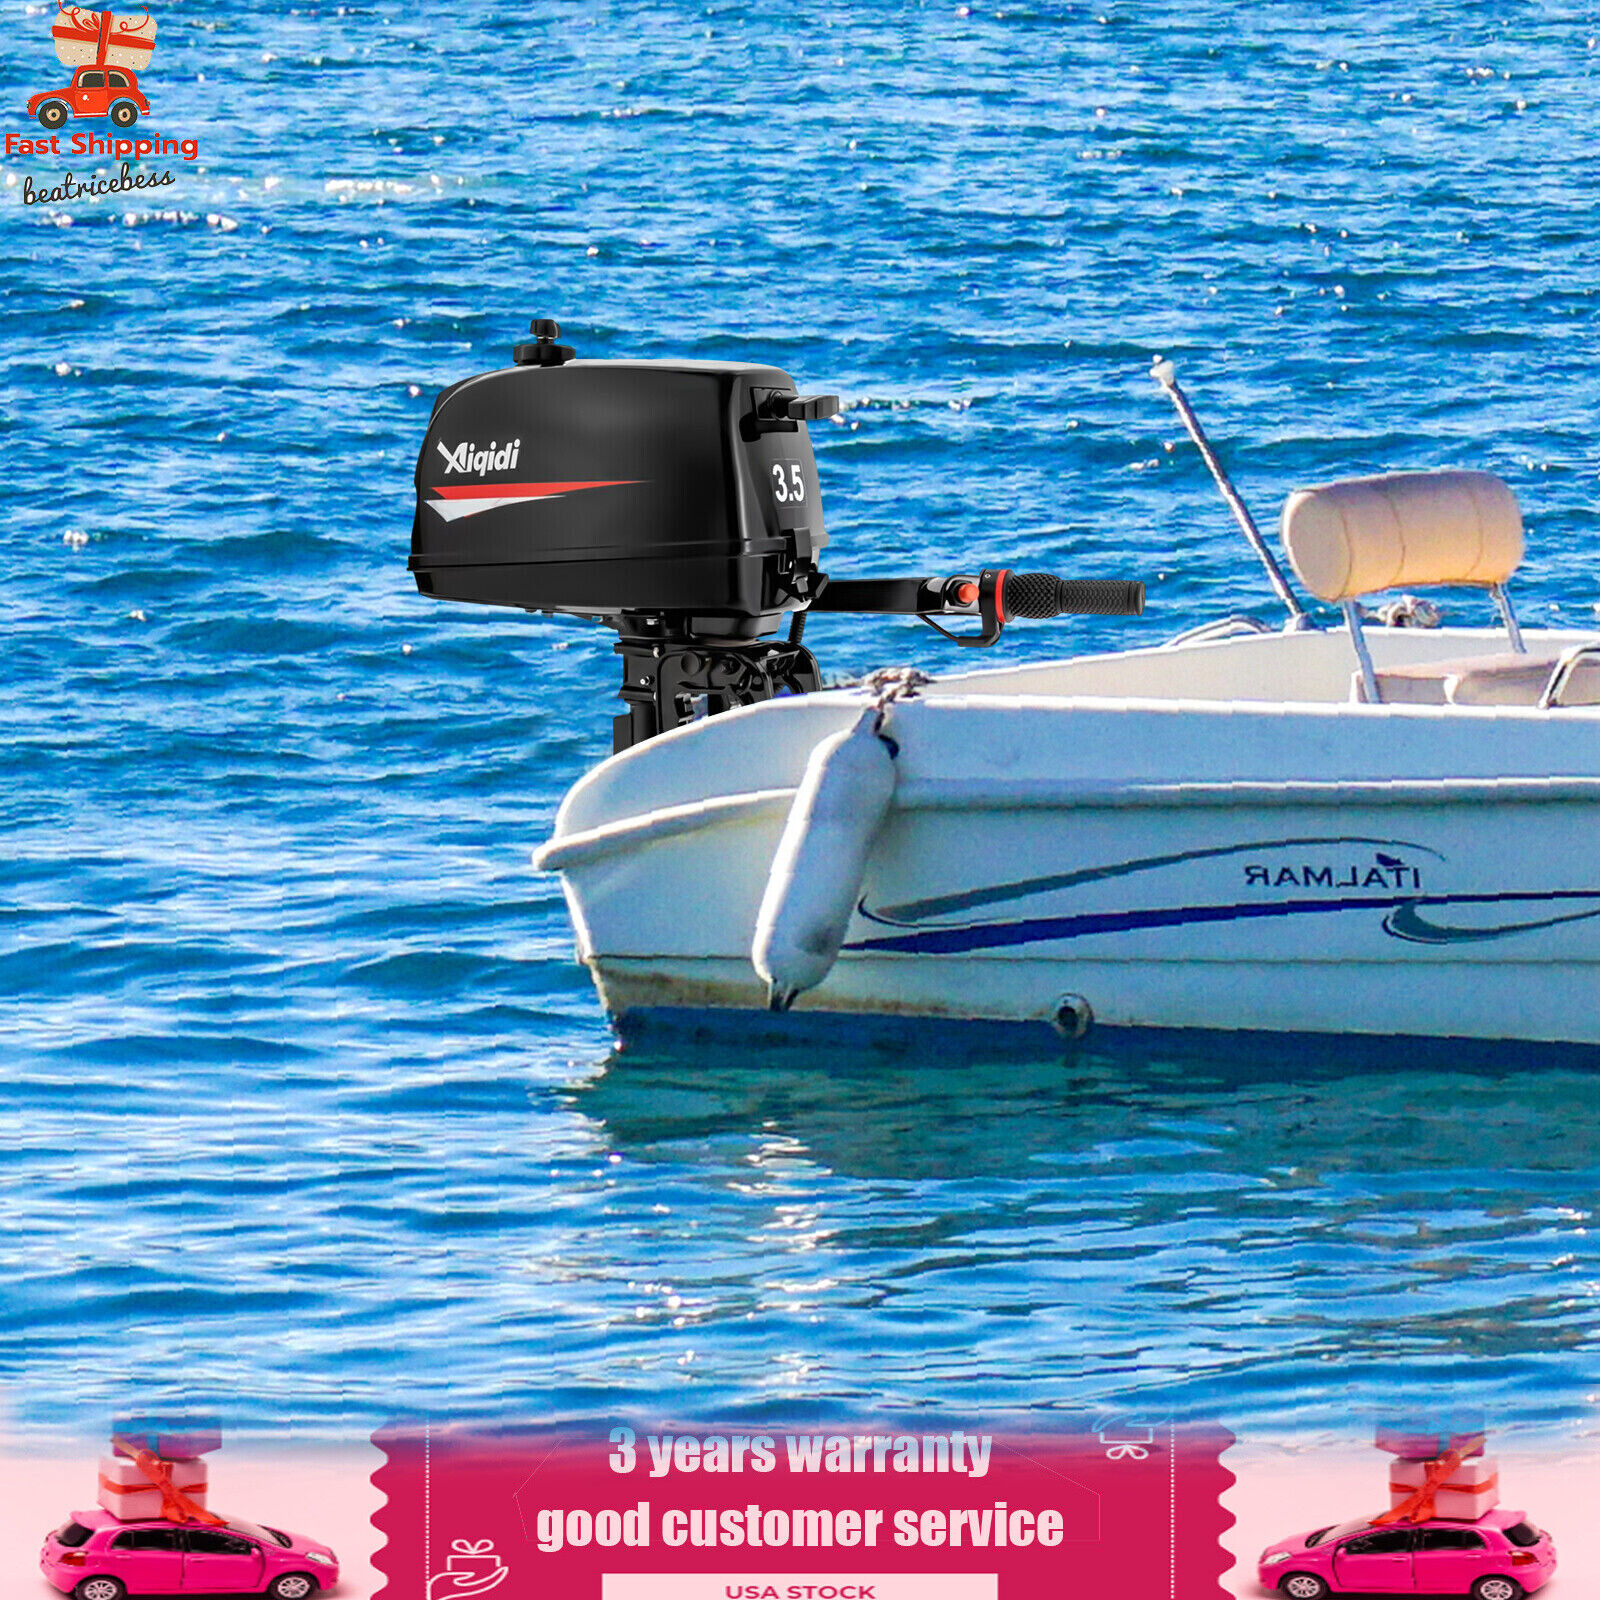 2 Stroke 3.5HP Outboard Motor Boat Engine w/Water Cooling Heavy Duty + tool bag